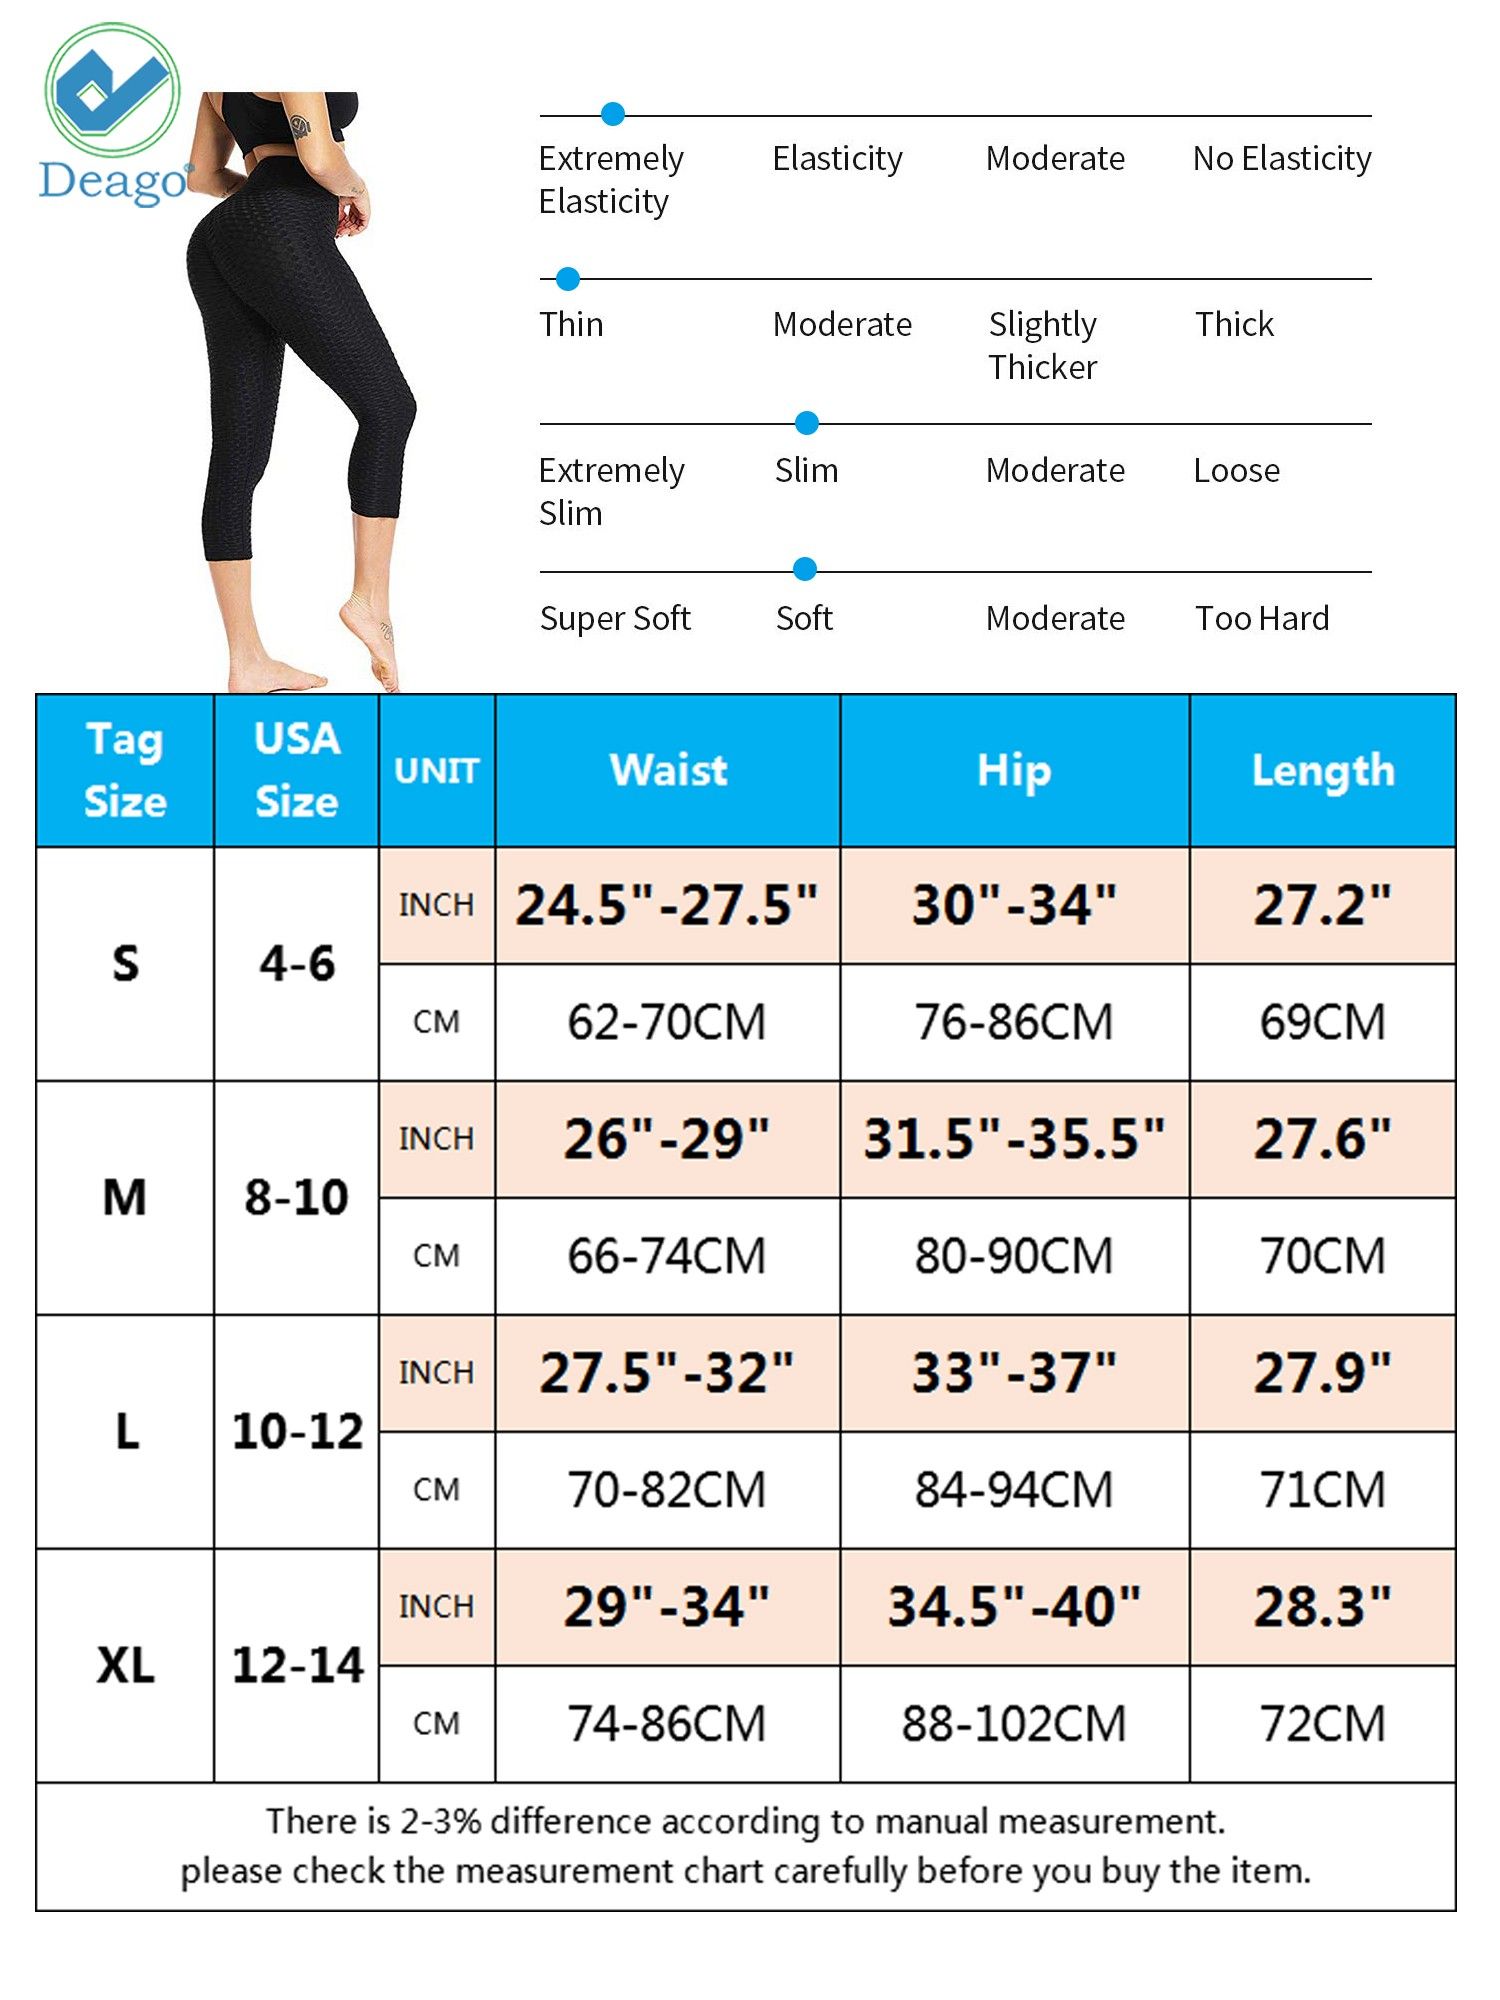 Deago Women's High Waist Yoga Pants Capri Lift up Butt Tummy Control Workout Running Slimming Stretch Sports Leggings (Black,L) - image 2 of 9